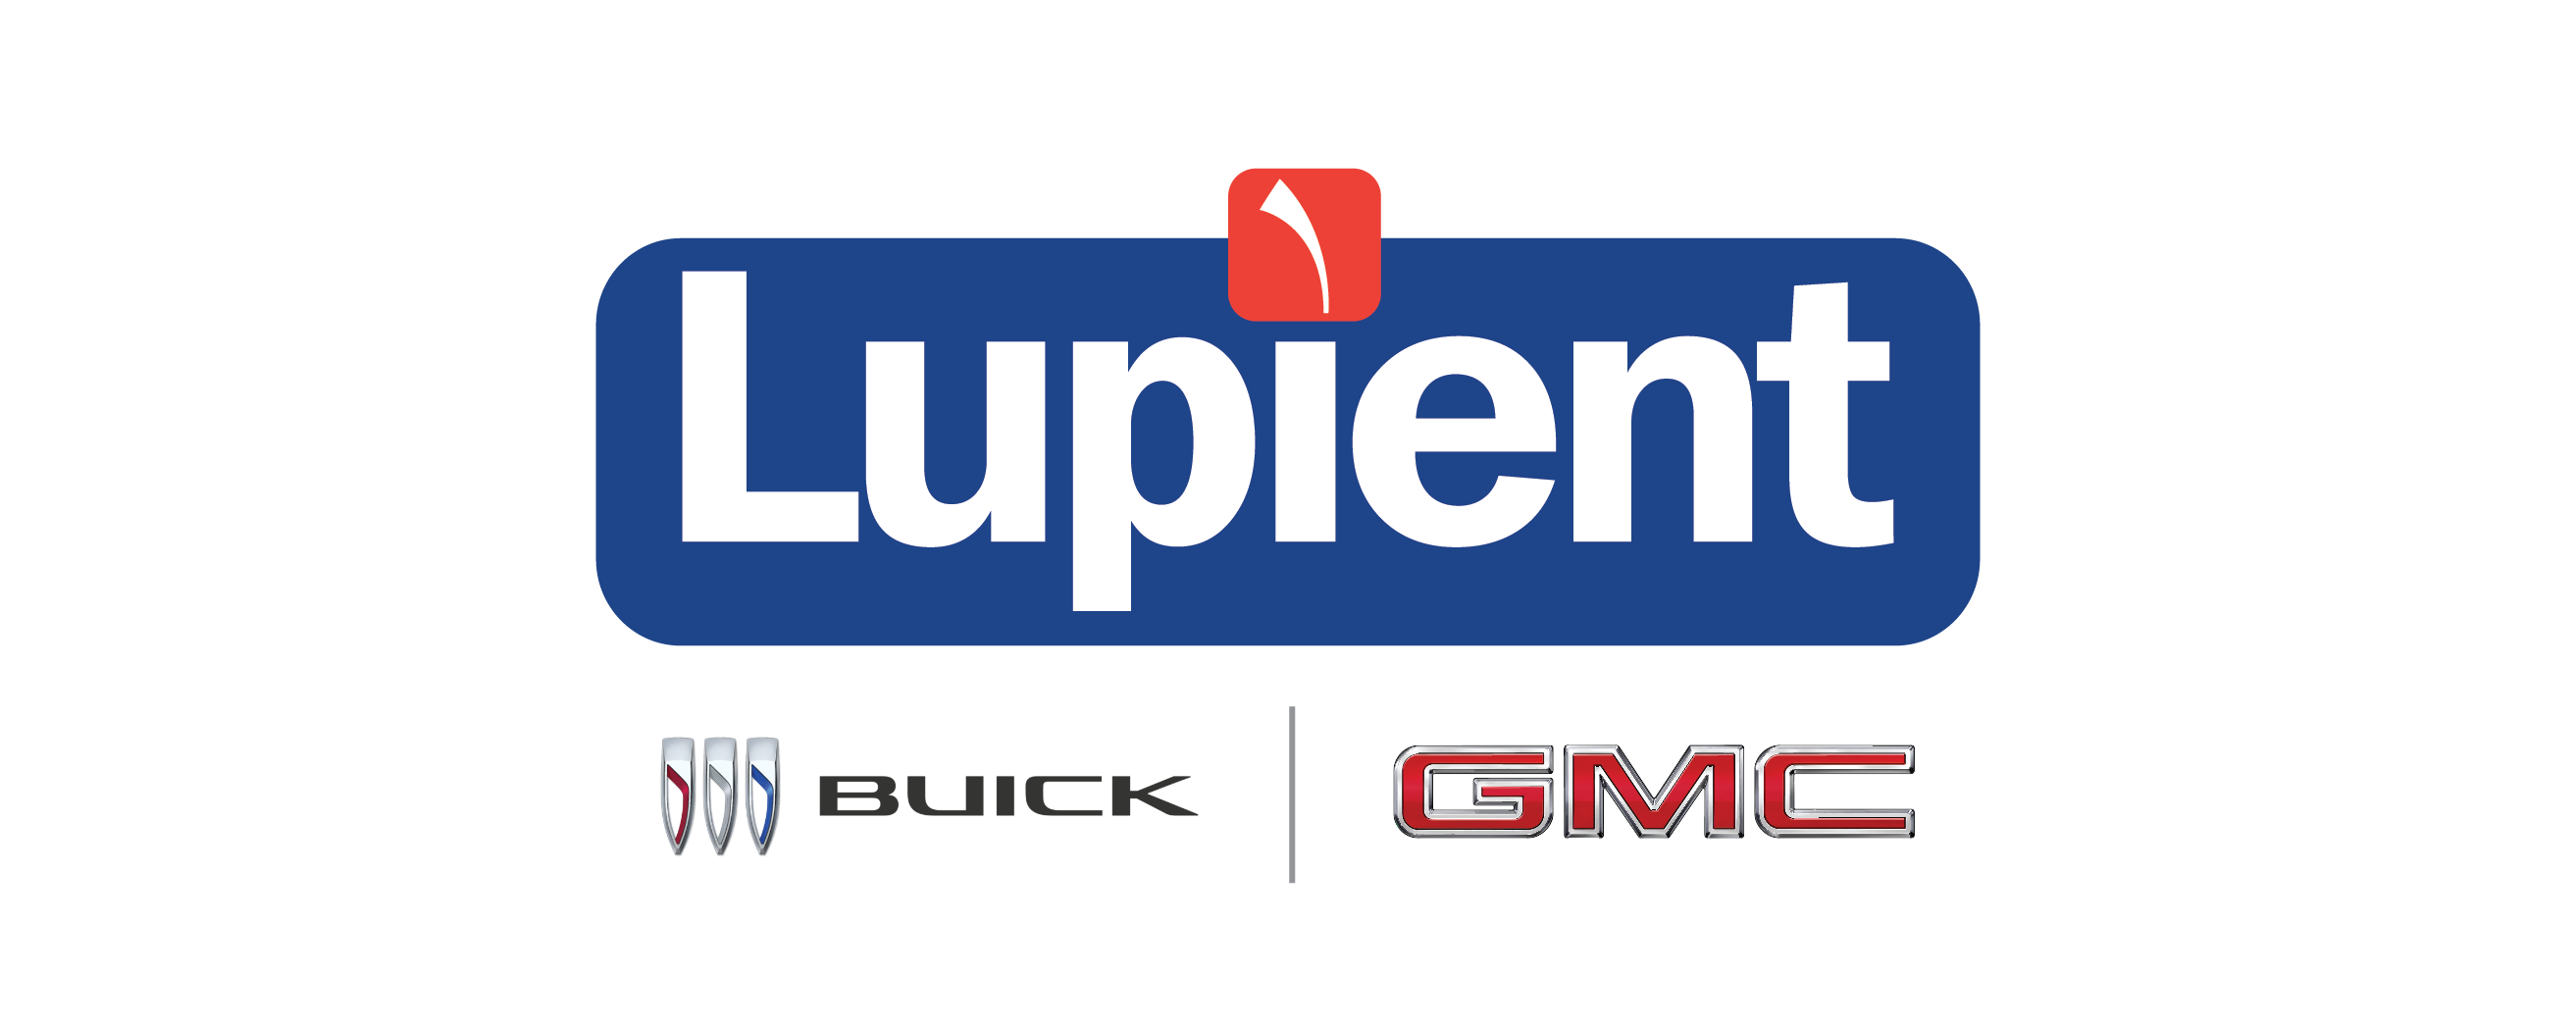 Lupient Buick GMC logo